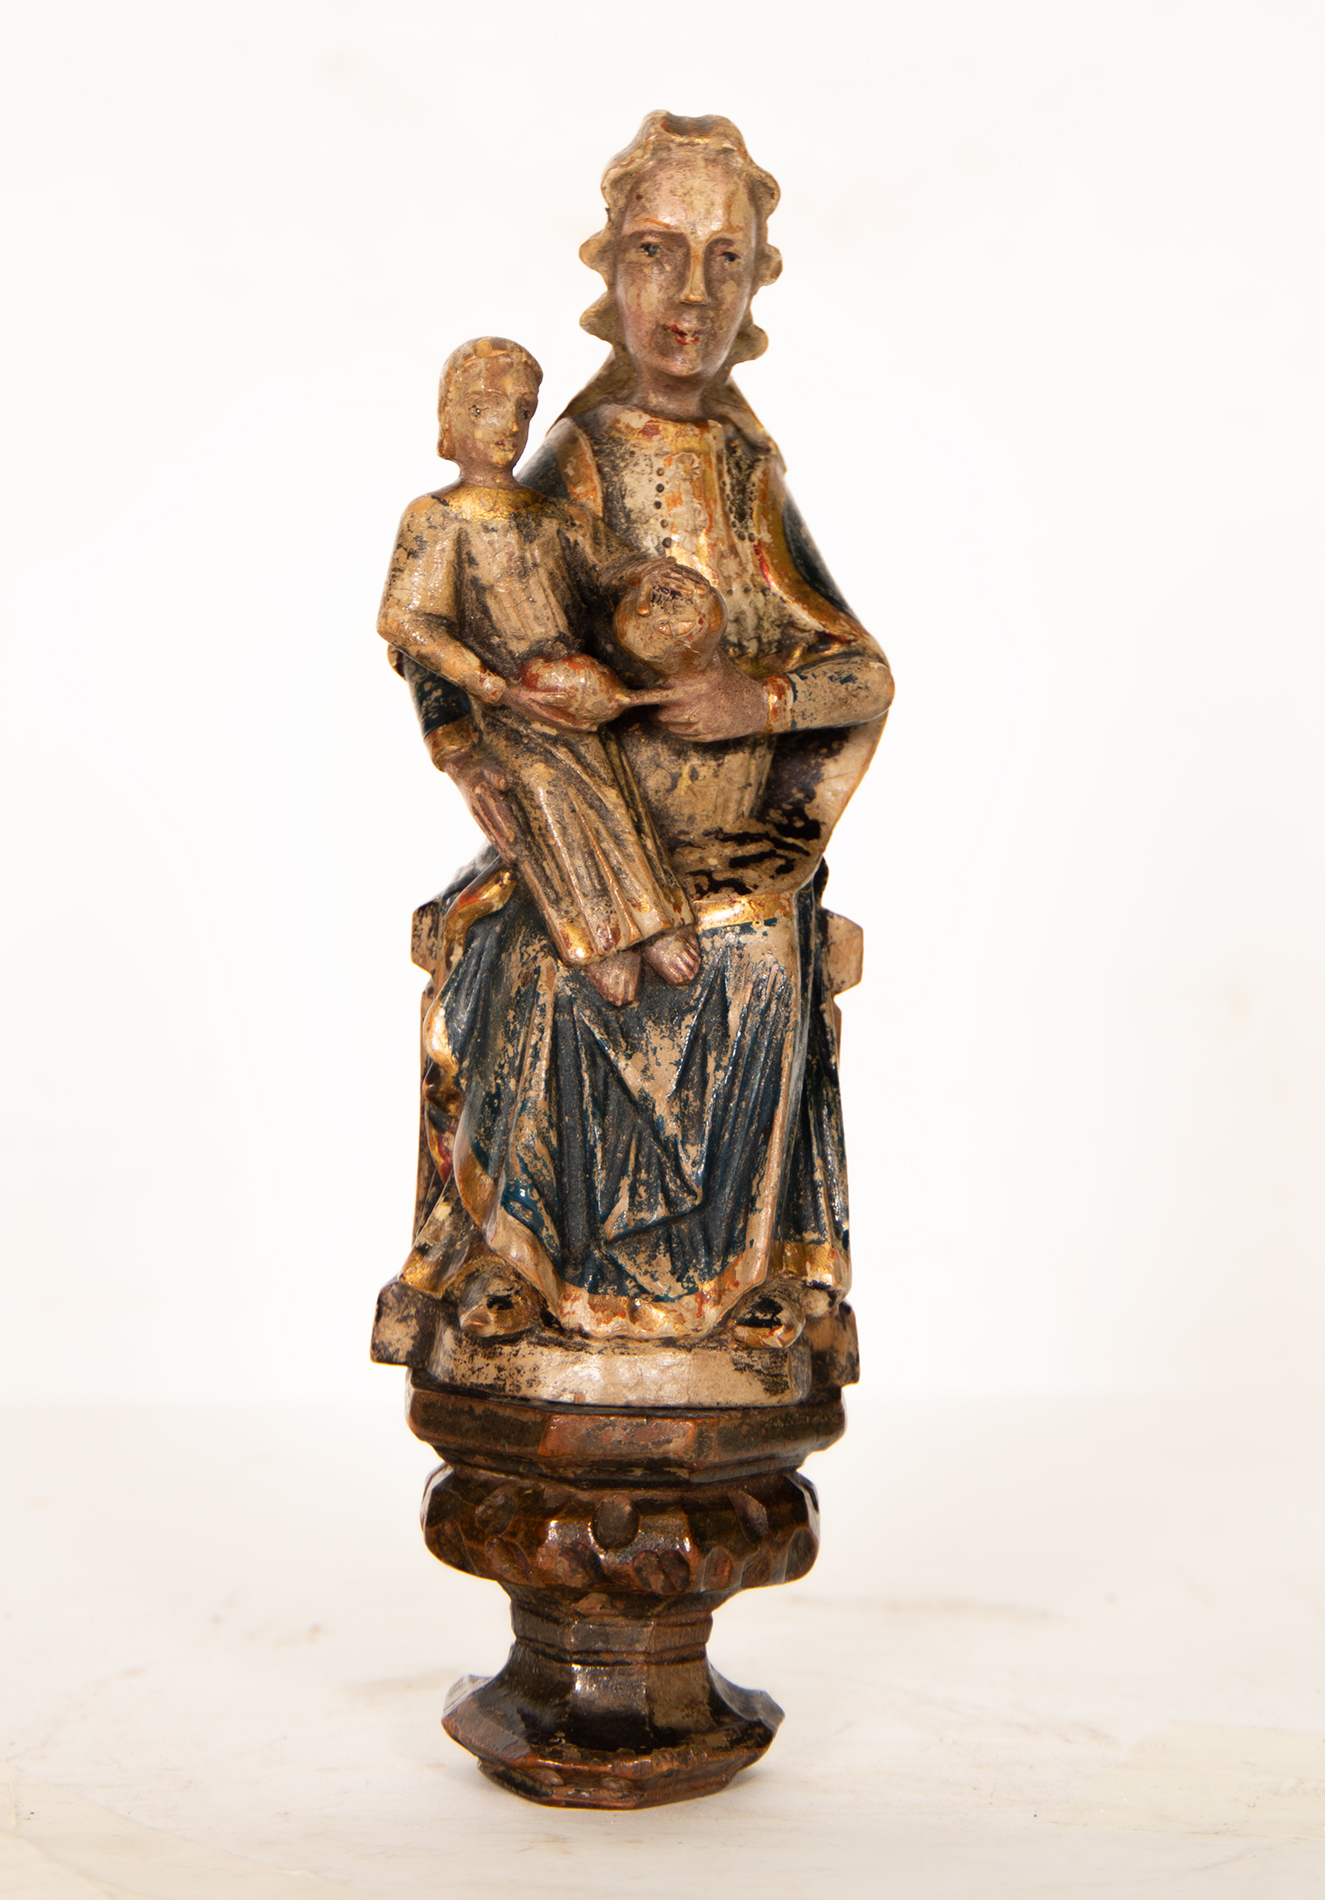 Virgin with Child in her arms, Mechelen school, 17th century